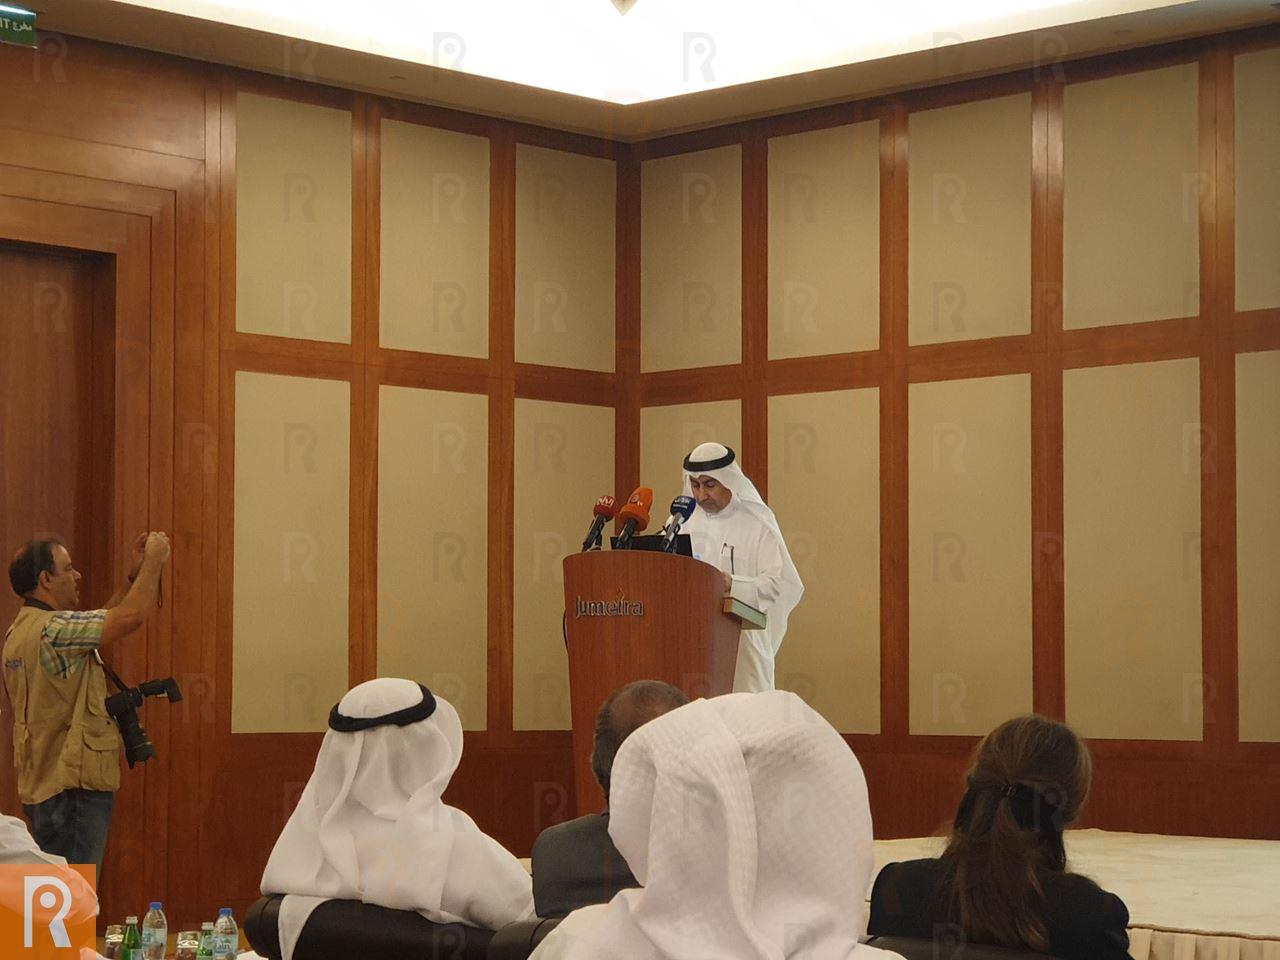 Dubai Supreme Council of Energy organizes a roadshow of the Emirates Energy Award 2020 in Kuwait